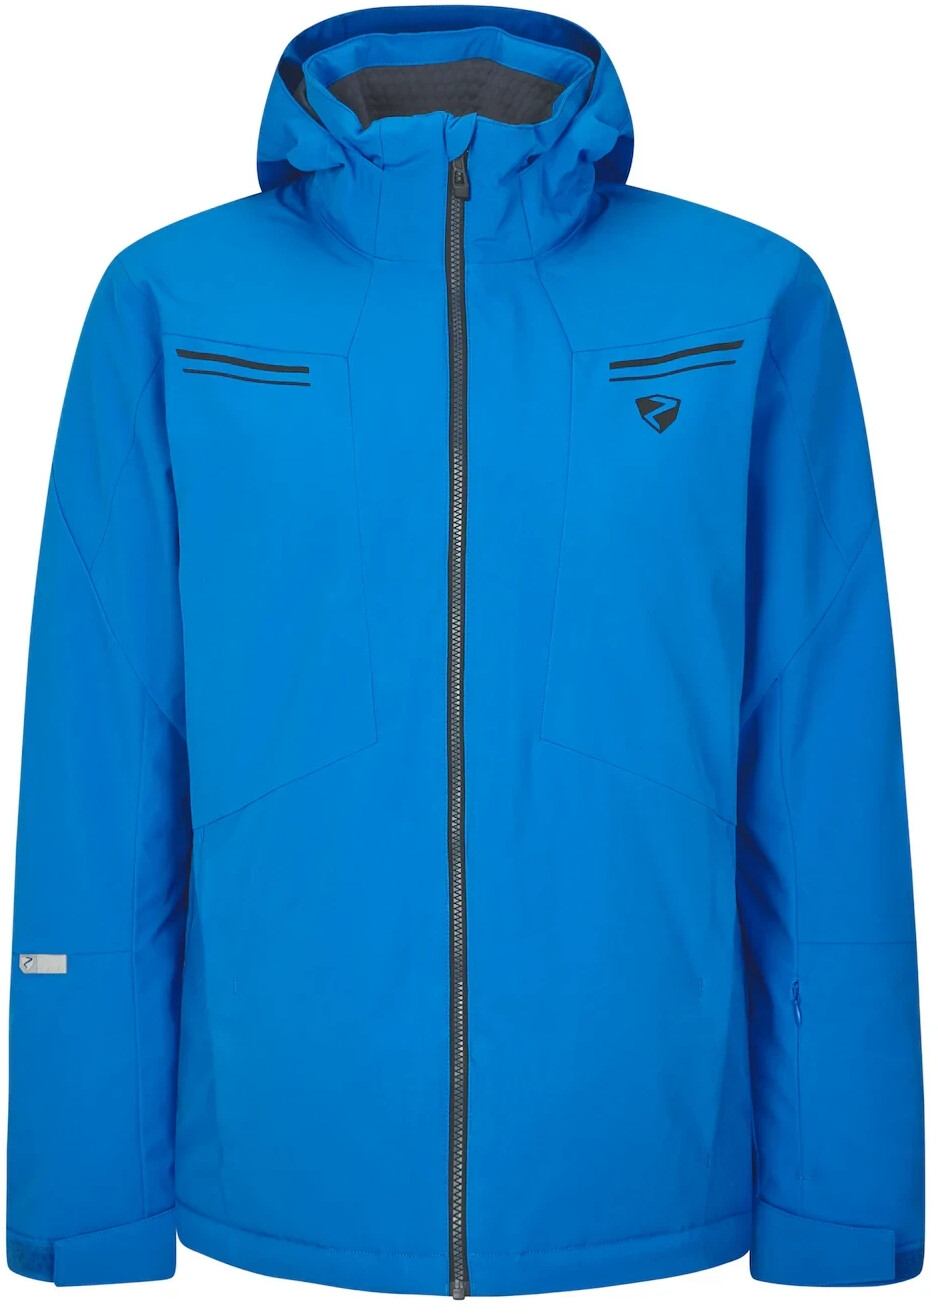 ab Tafar € Jacket 125,72 Ziener persian blue Preisvergleich | Ski bei